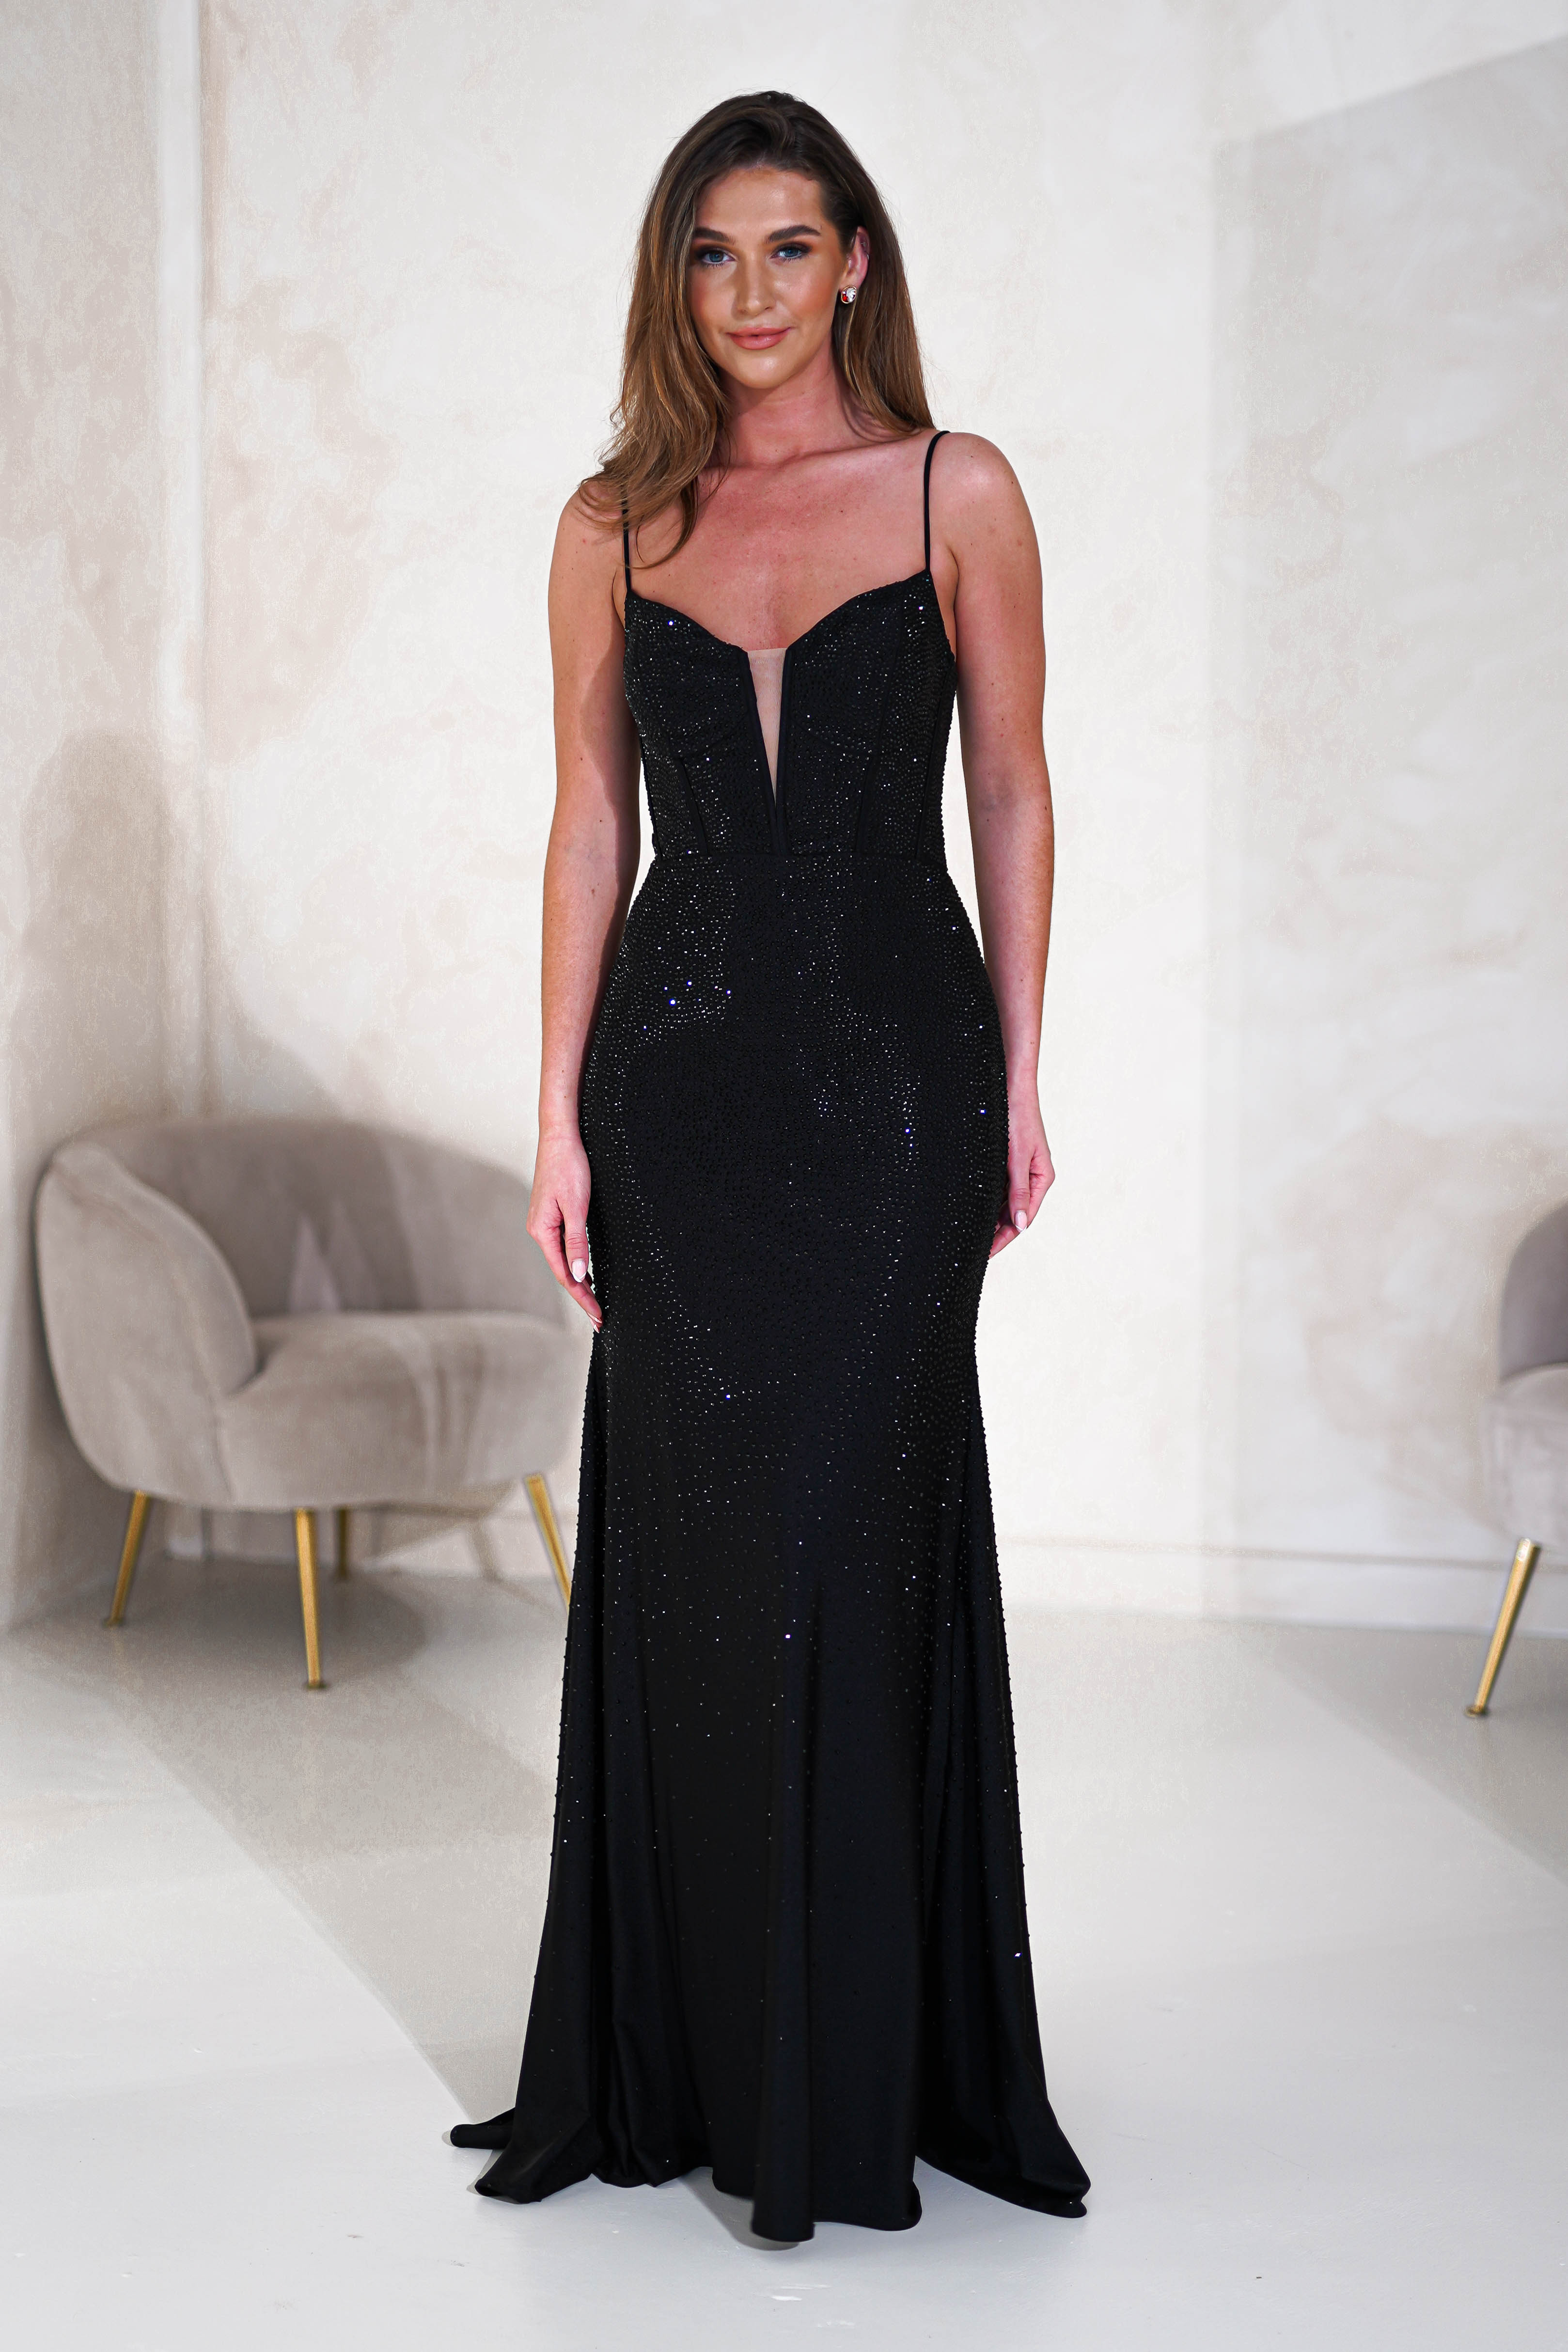 sabrina-diamante-gown-black-dresses-52739132817749.jpg